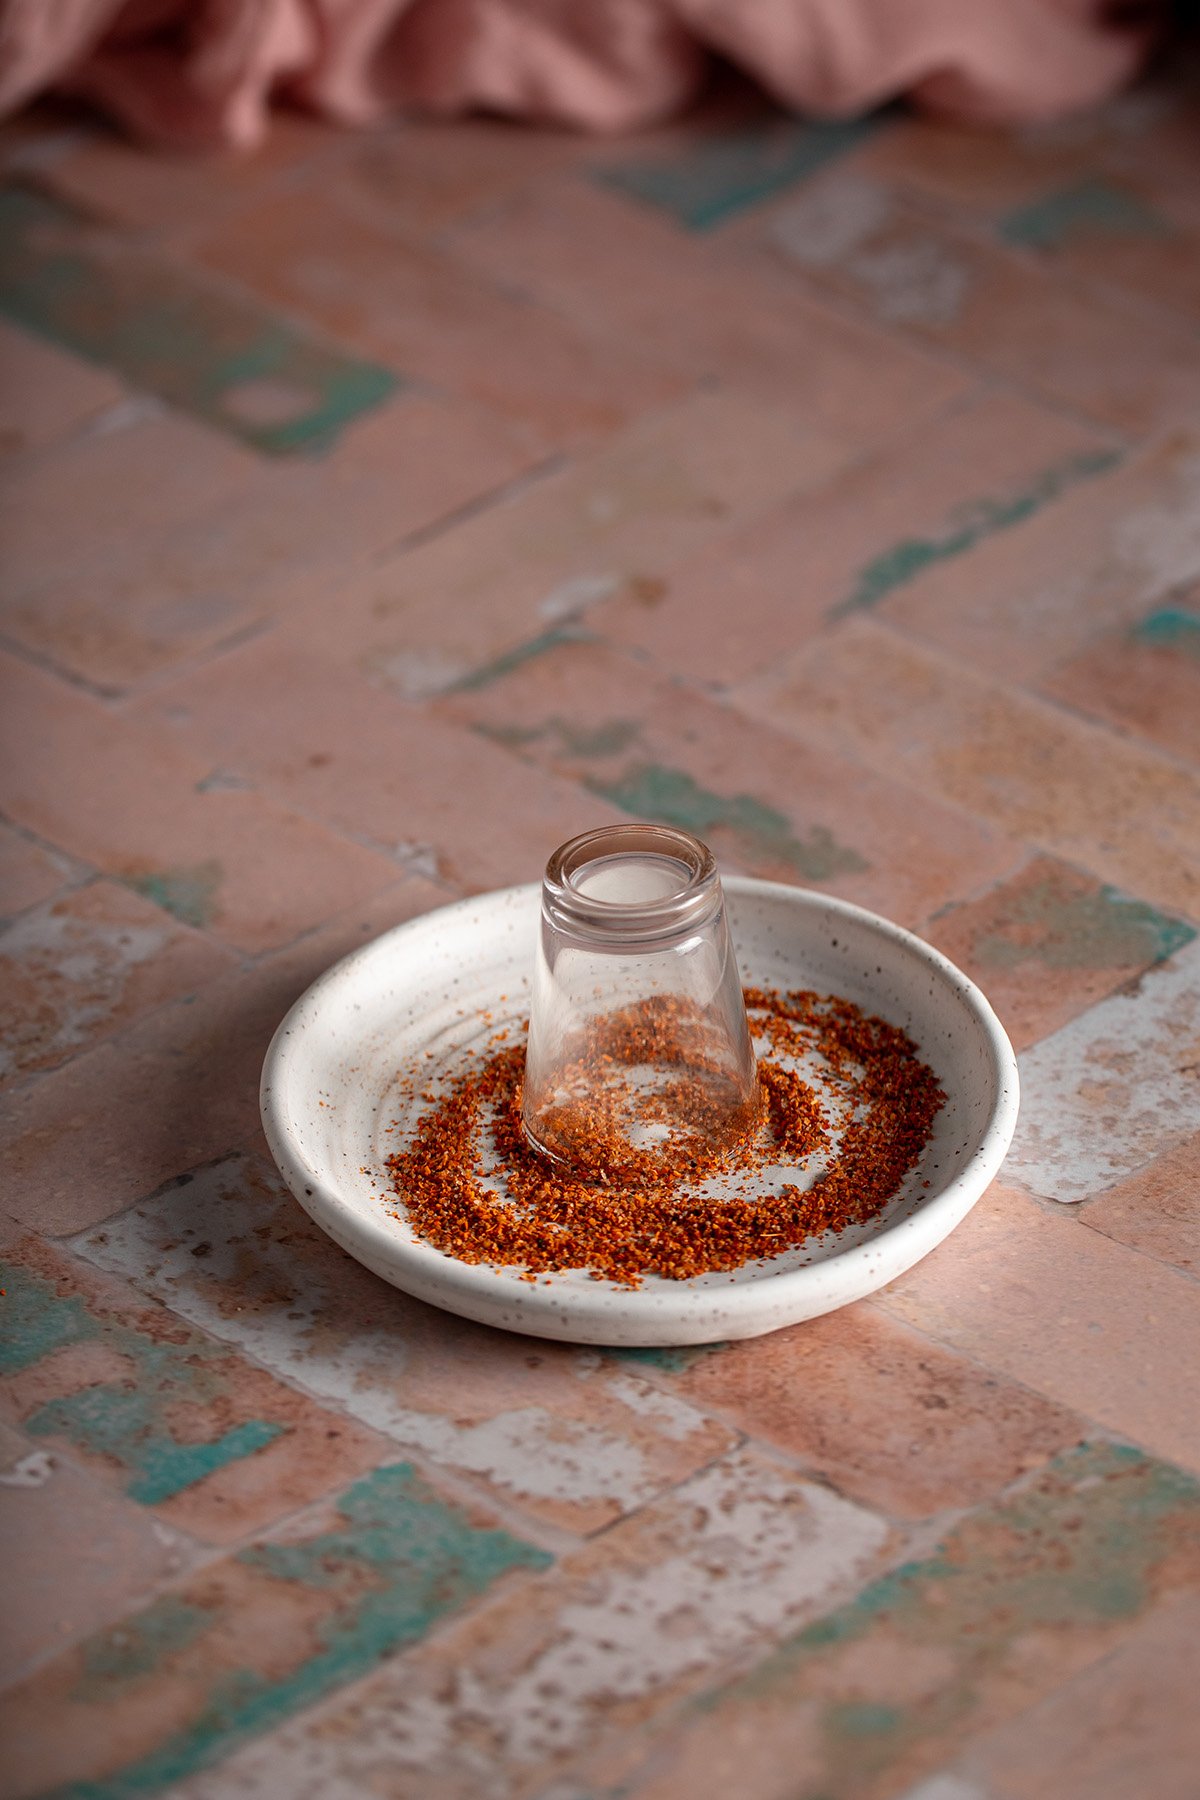 a shot glass turned upside down in a small plate of tajin.